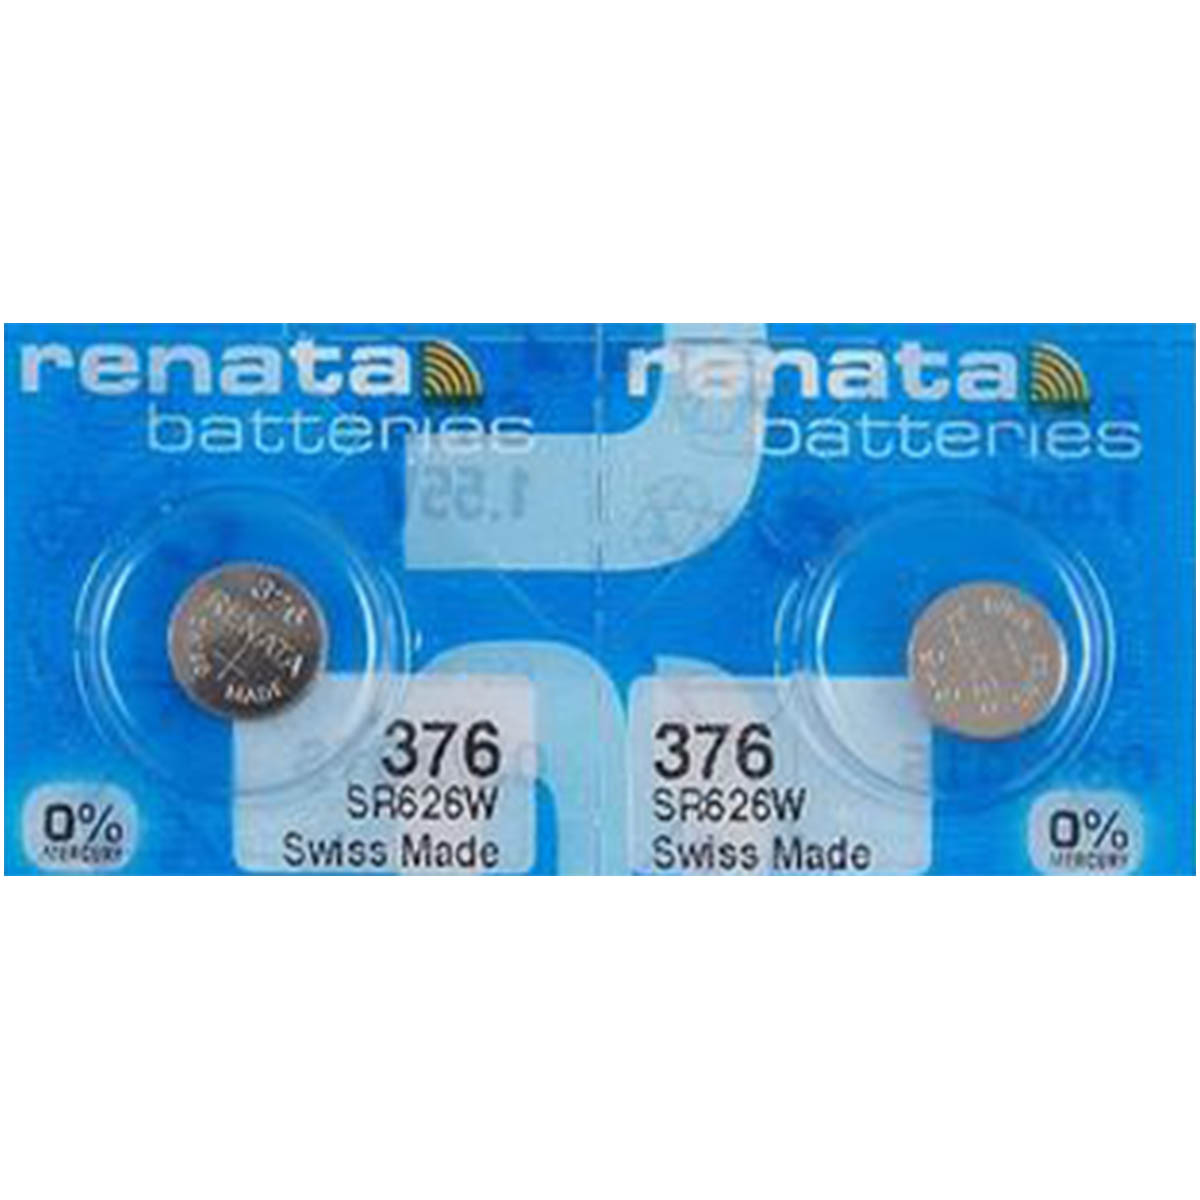 Renata 376 Battery (SR626W) Silver Oxide 1.55V (1PC)